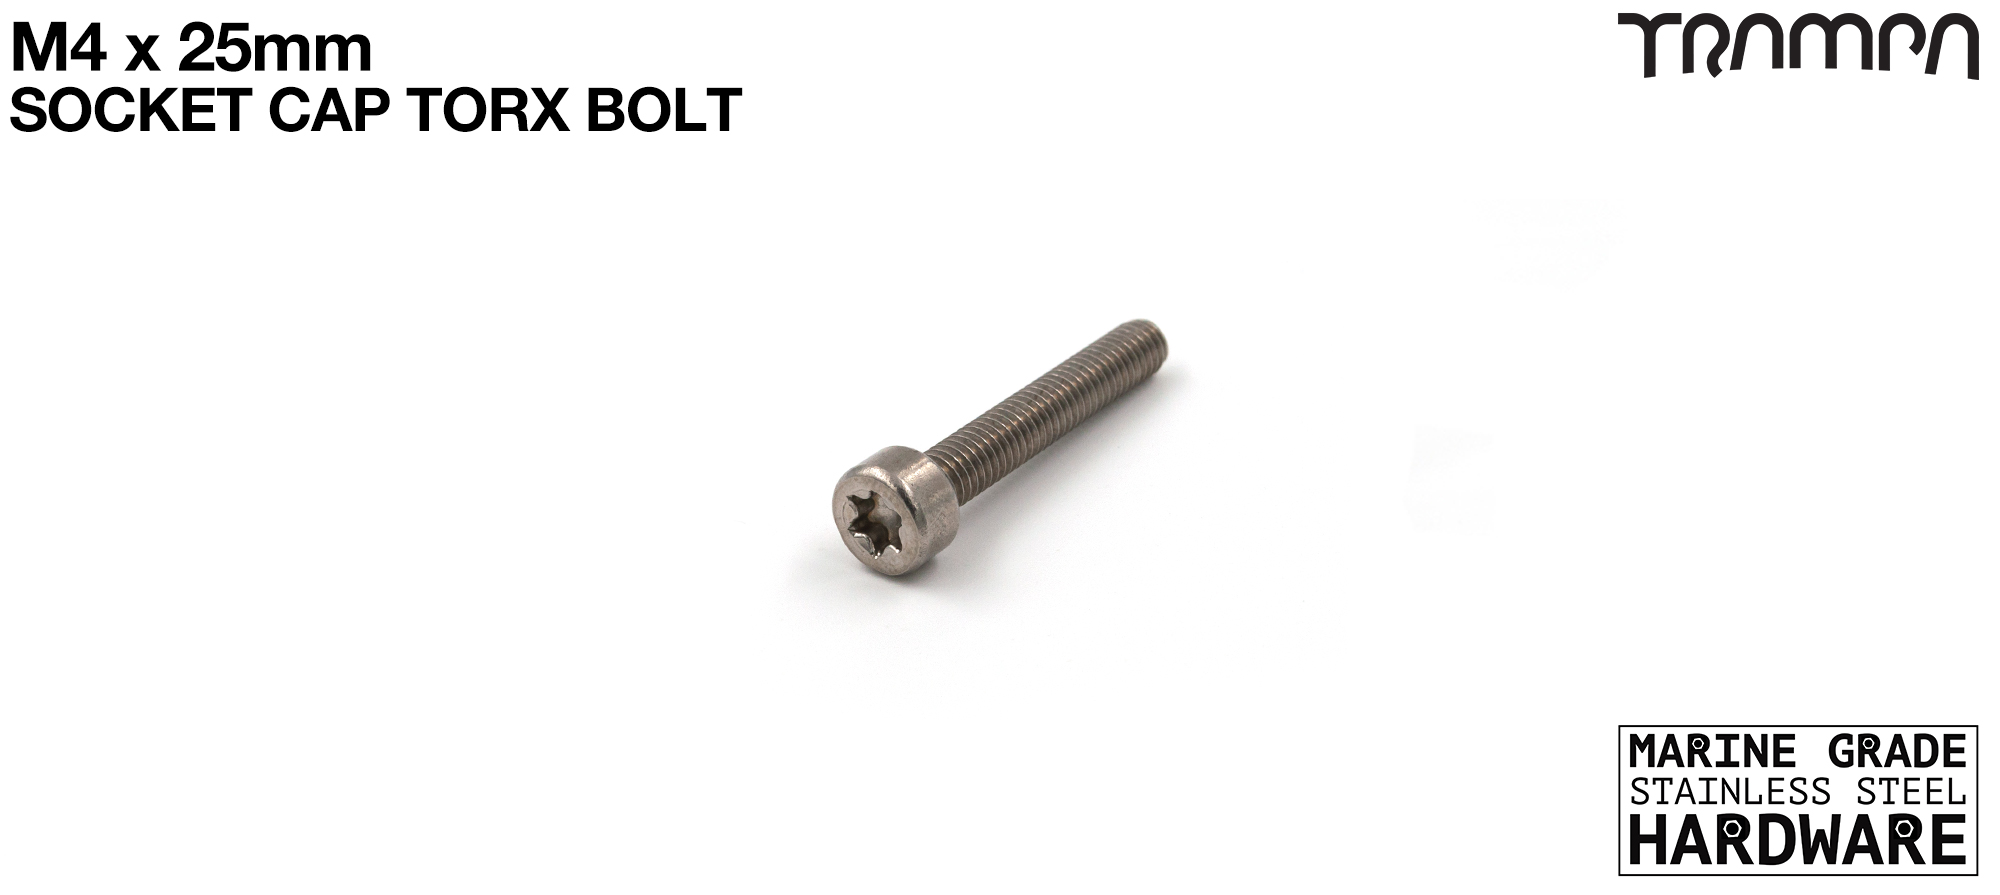 M4 x 25mm Socket Capped Head TORX Bolt ISO 4762 Marine Grade Stainless Steel 